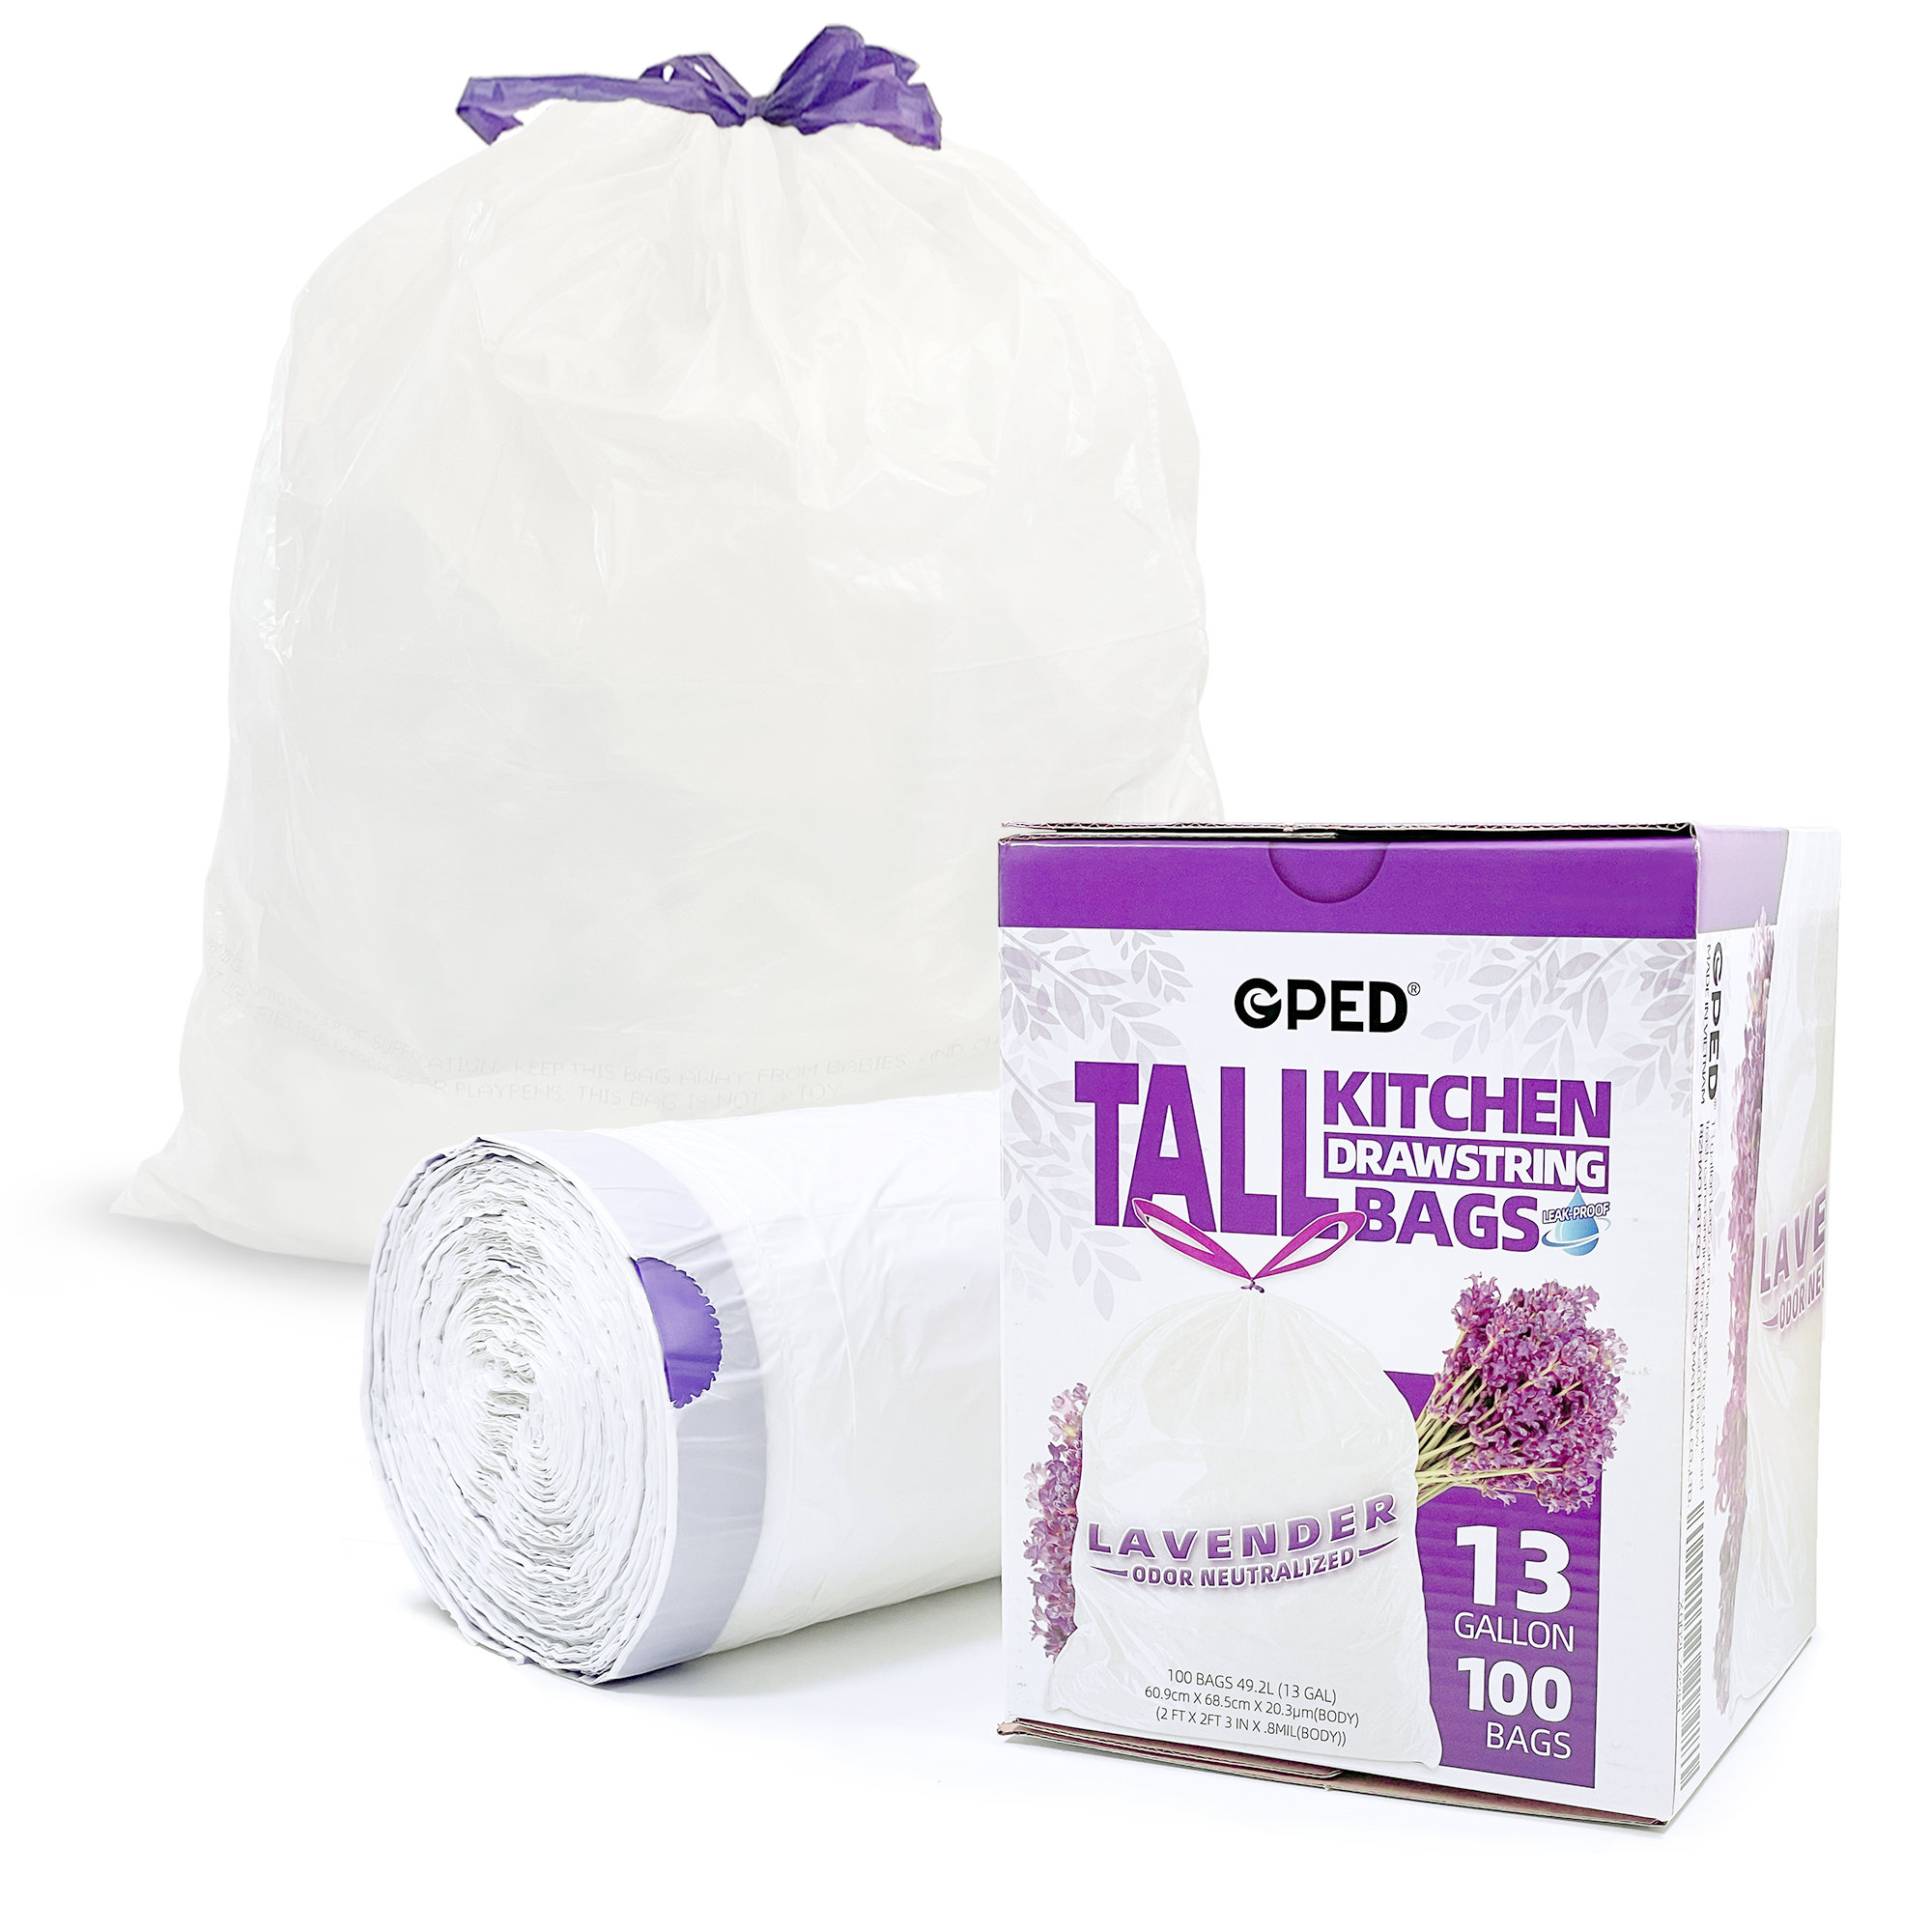 13-Gal. Trash Bags, 200 Count (Set of 2) 8 Net Inc.